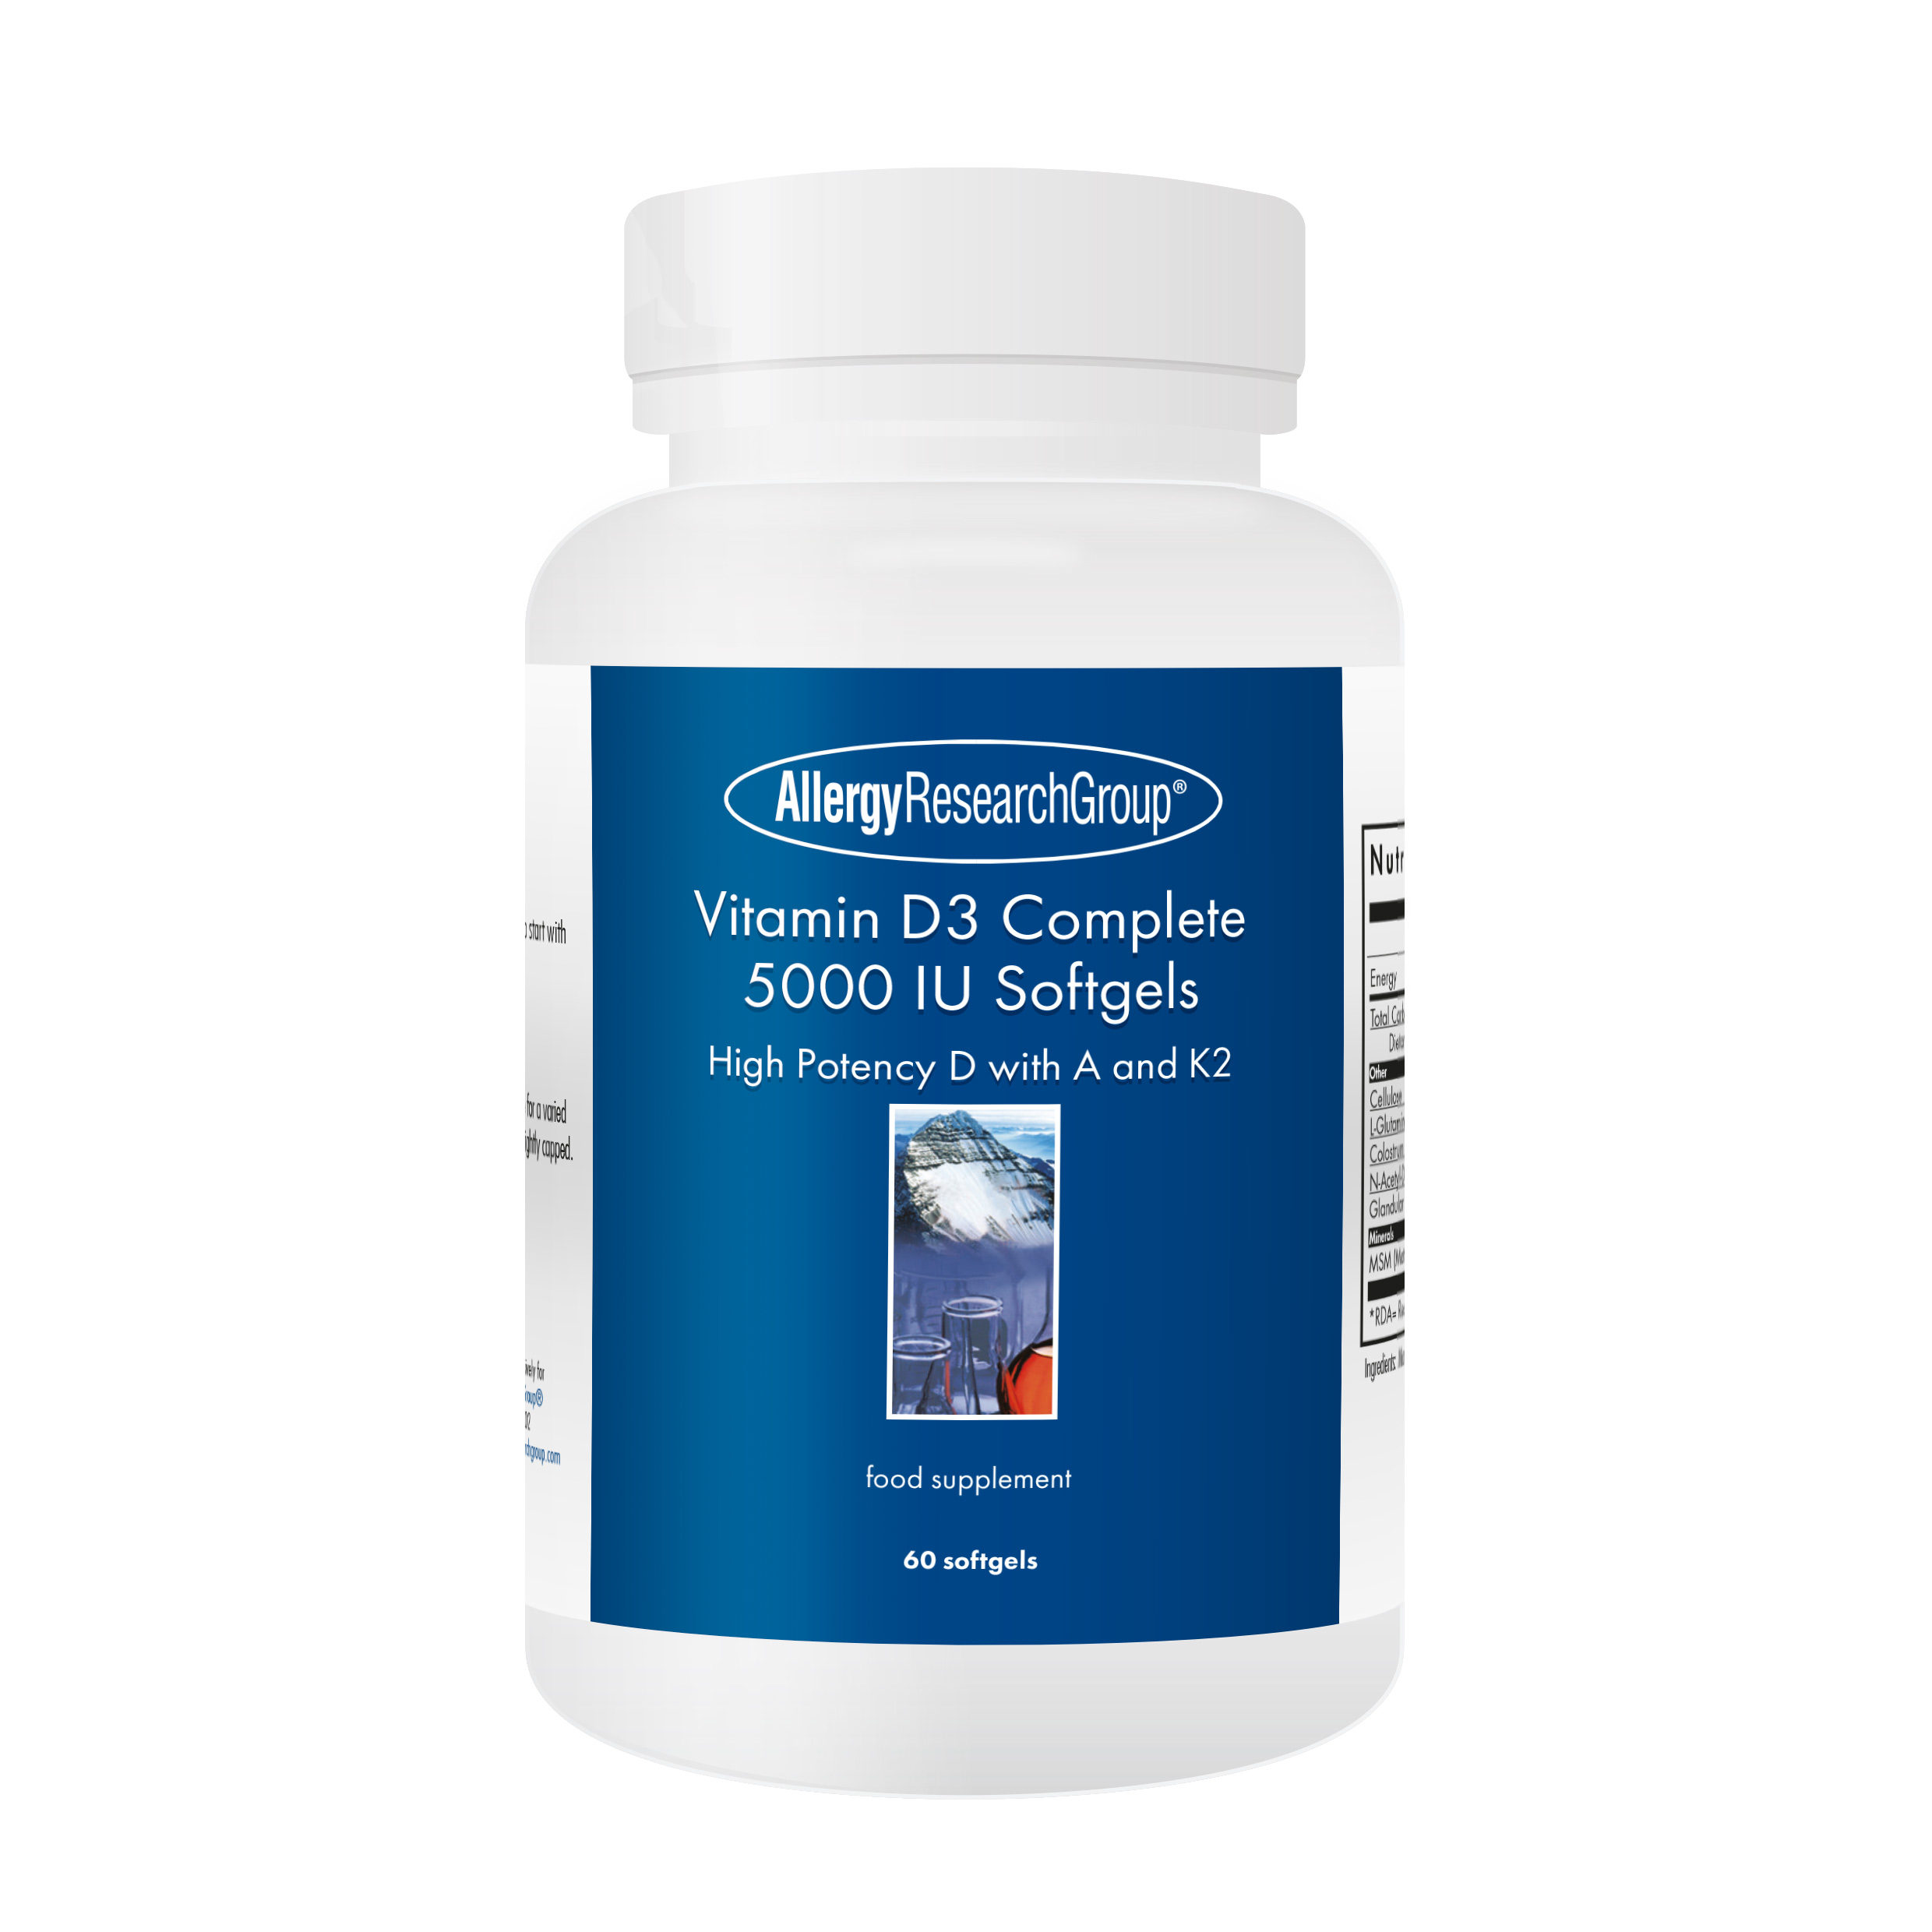 Vitamin D3 Complete 5000 IU Softgels 60's: The Natural Dispensary